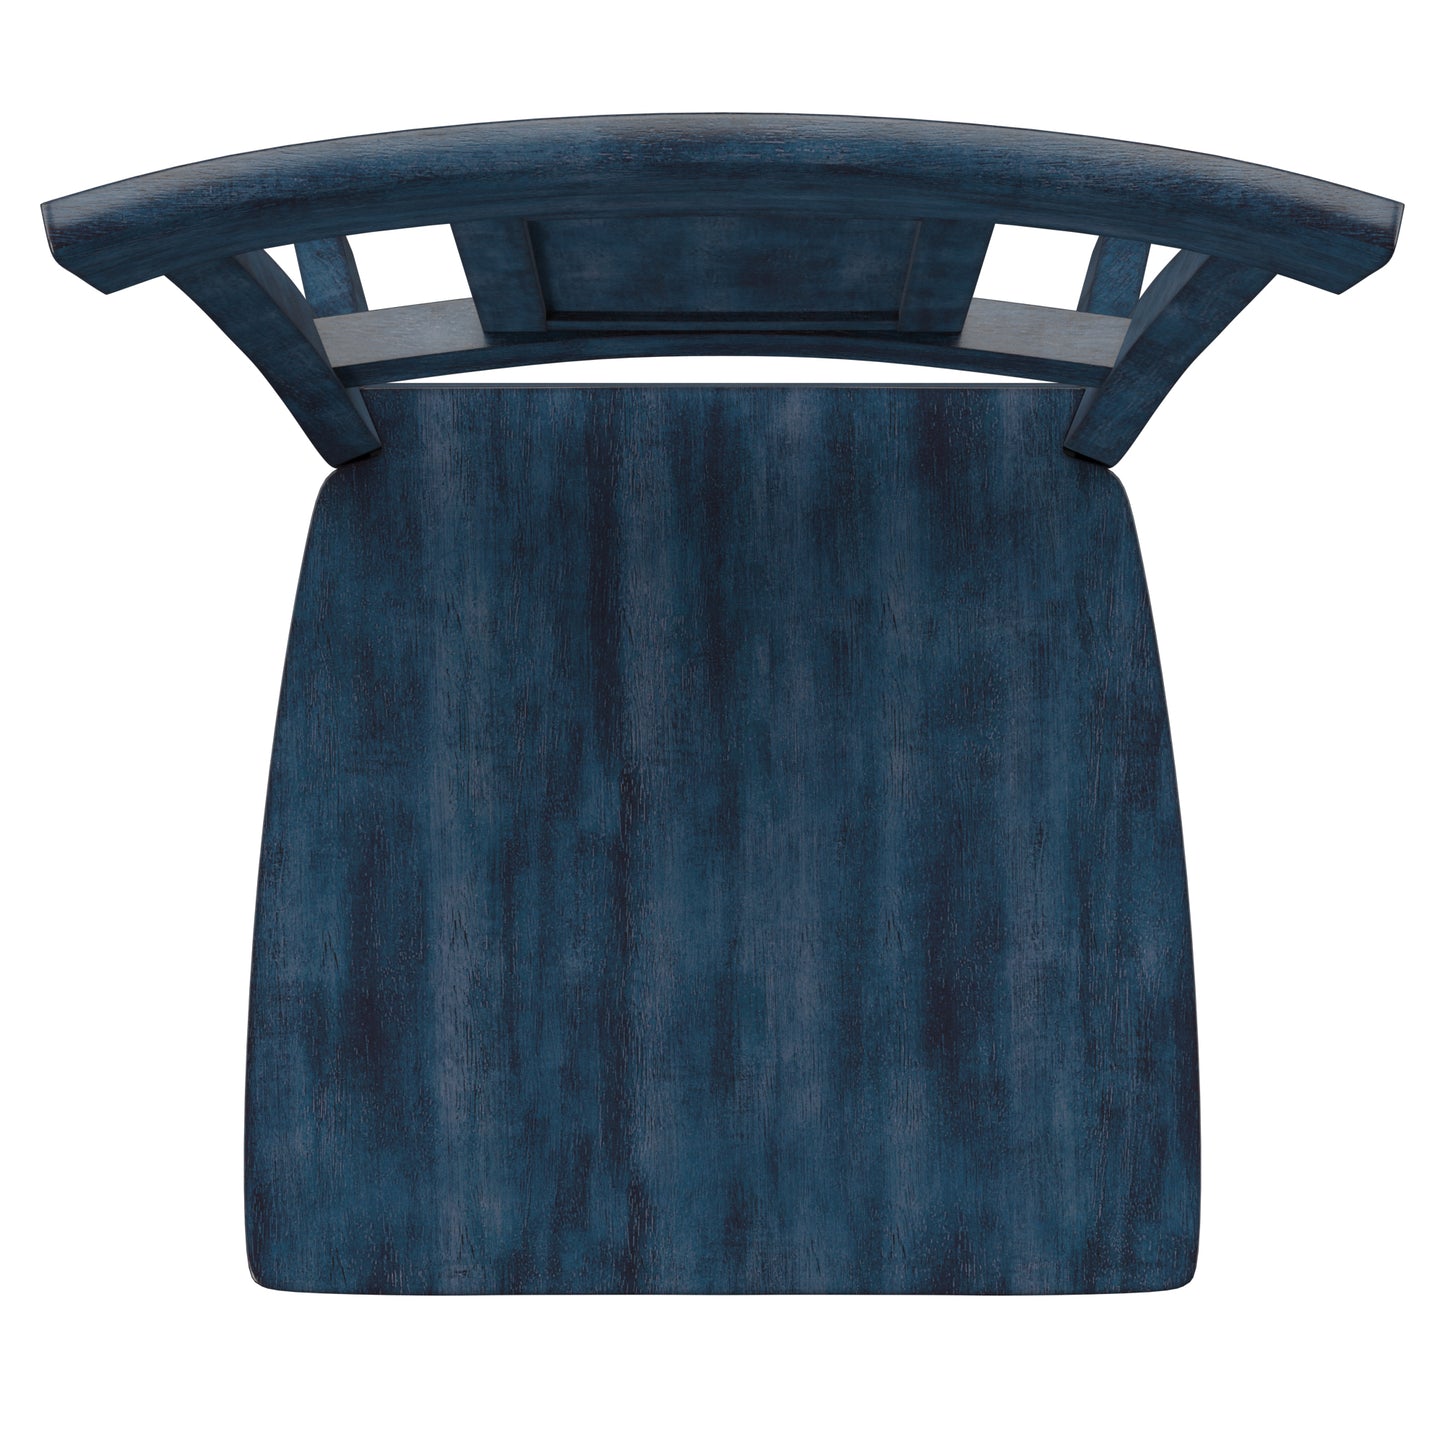 Panel Back Wood Dining Chairs (Set of 2) - Antique Dark Denim Blue Finish